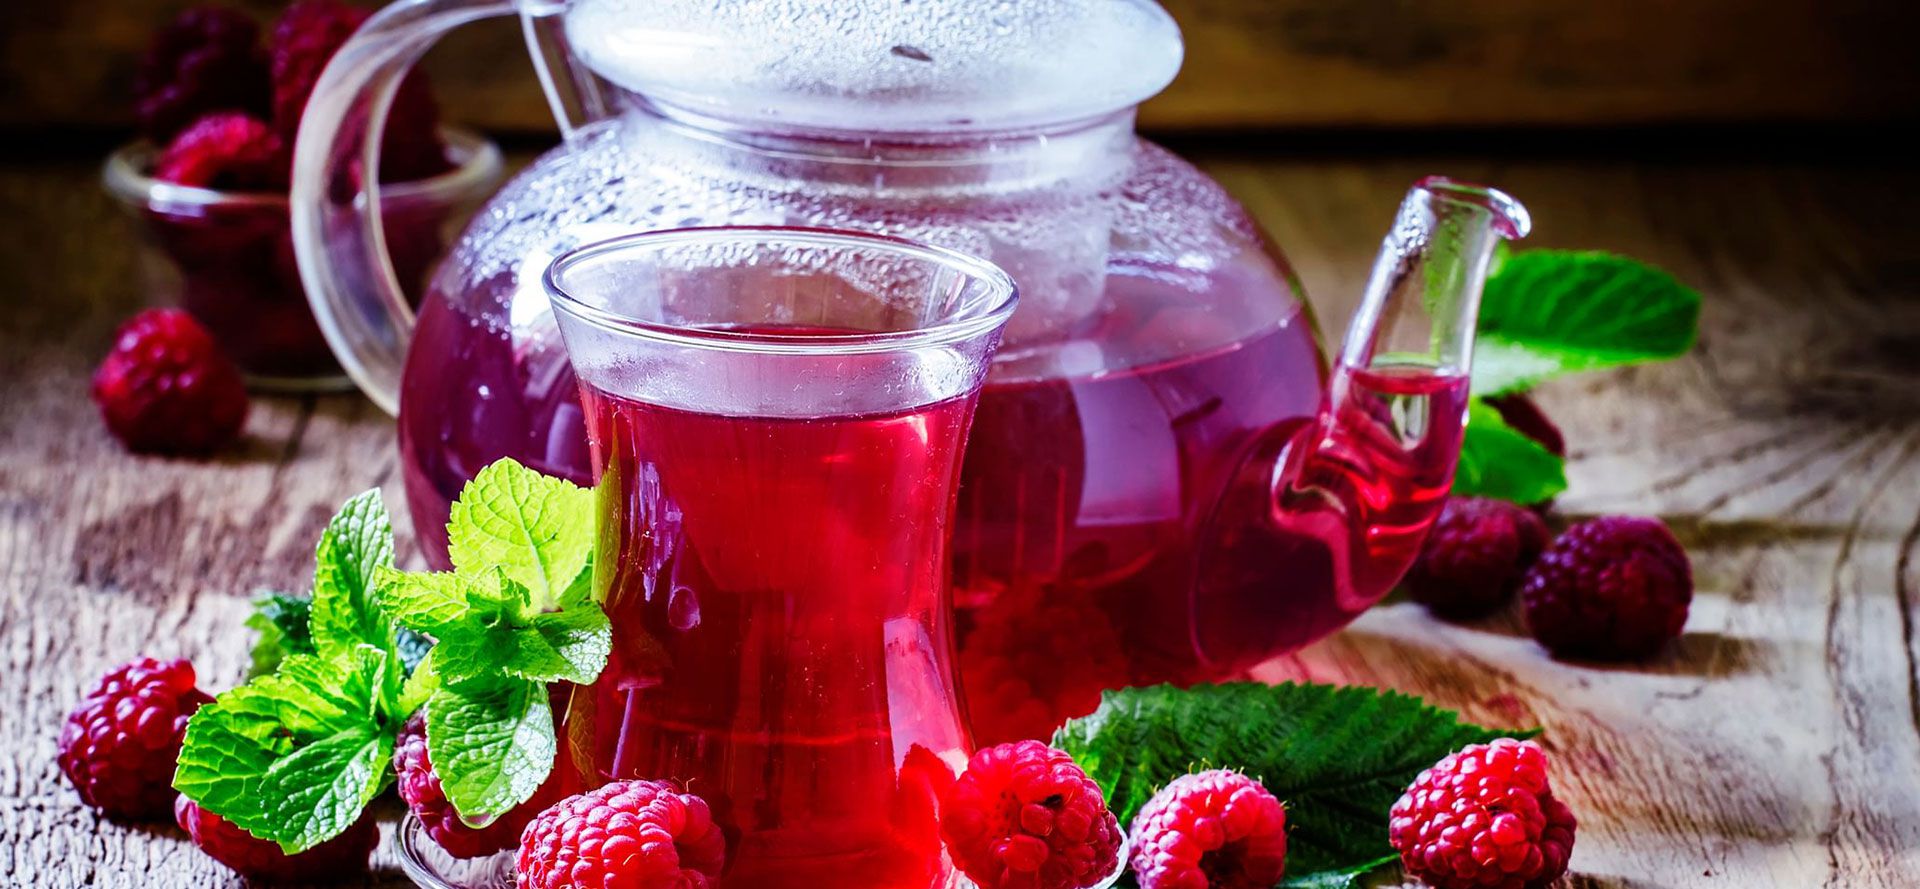 Raspberry tea with kettle on table